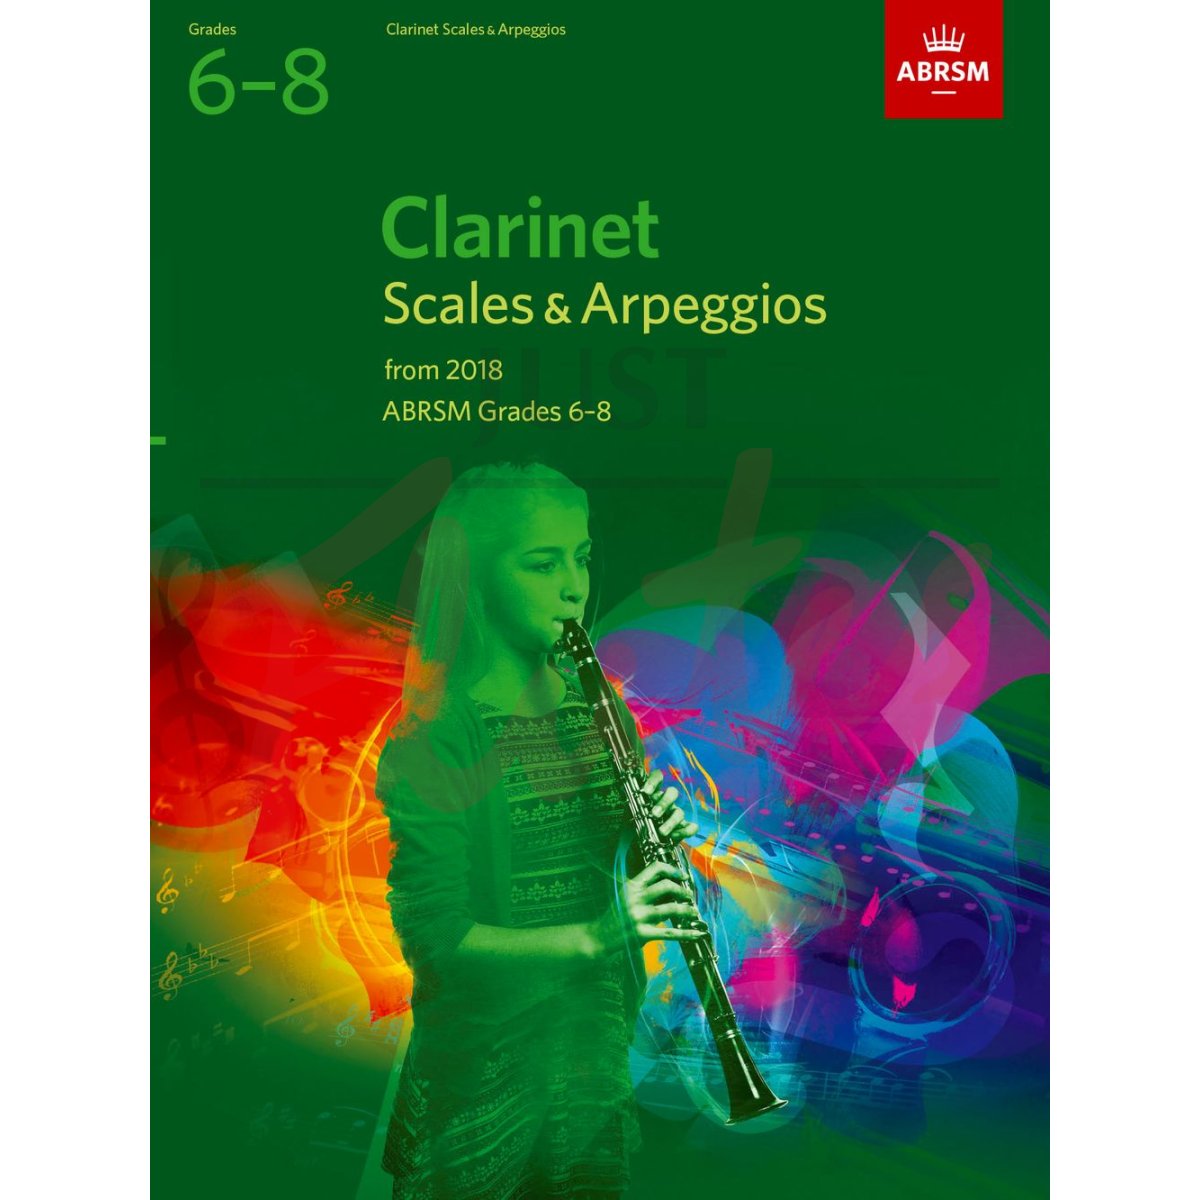 Scales &amp; Arpeggios Grades 6-8 (from 2018) [Clarinet]